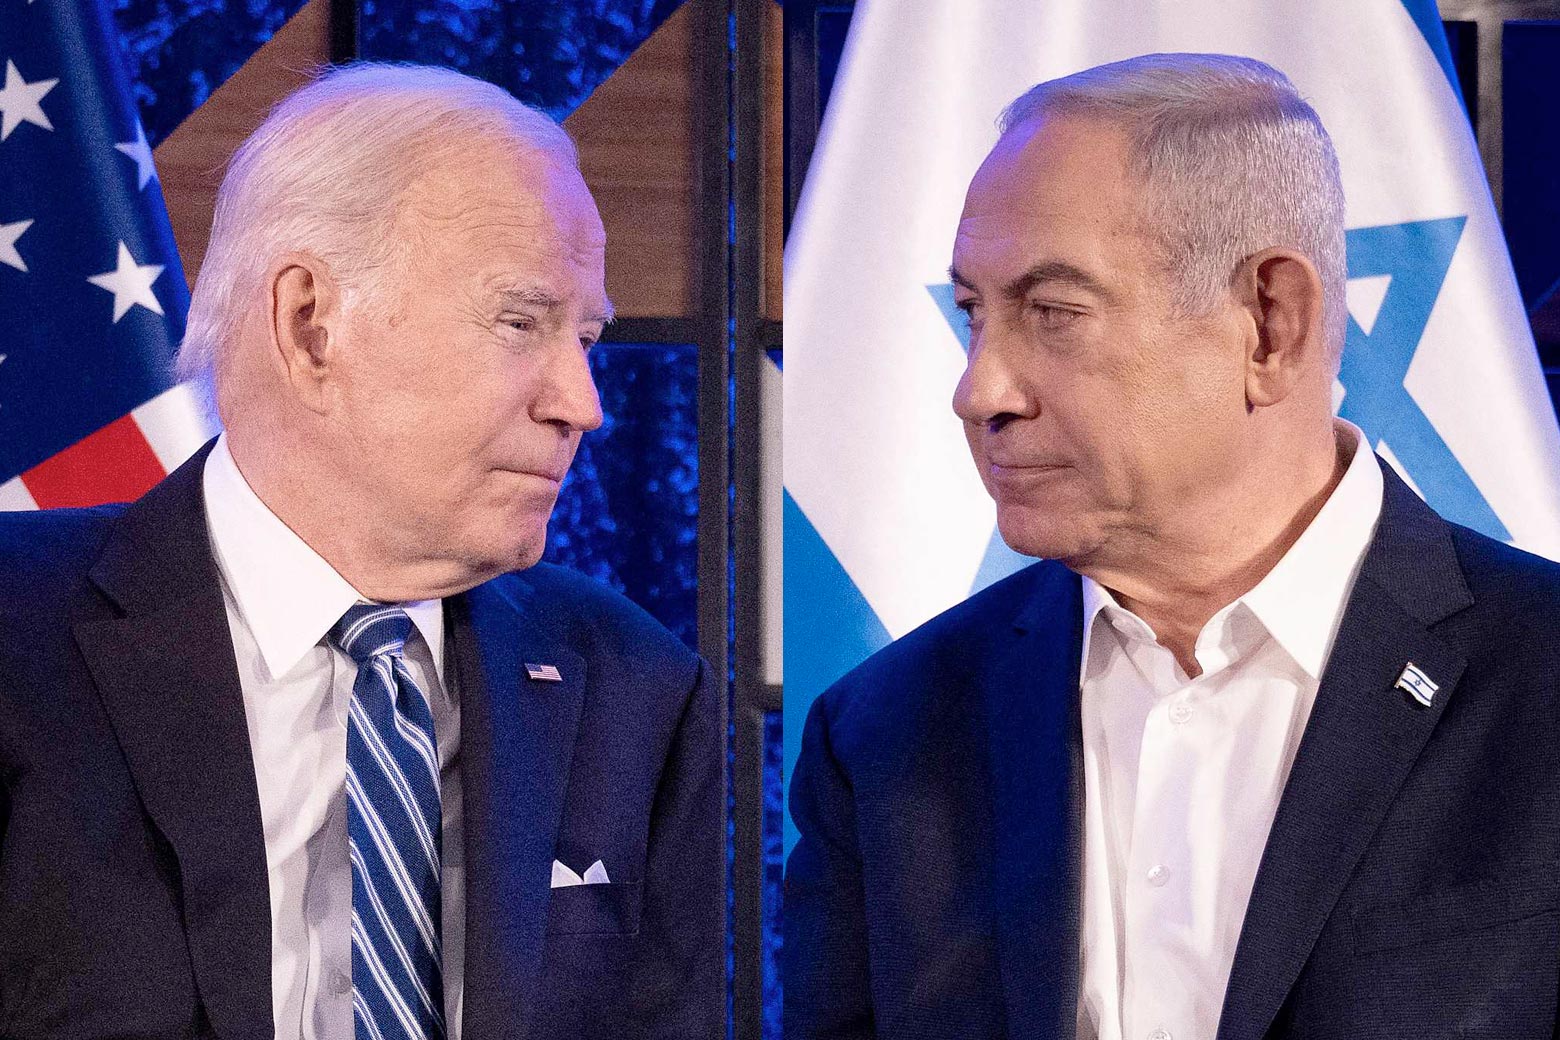 Biden and Netanyahu.